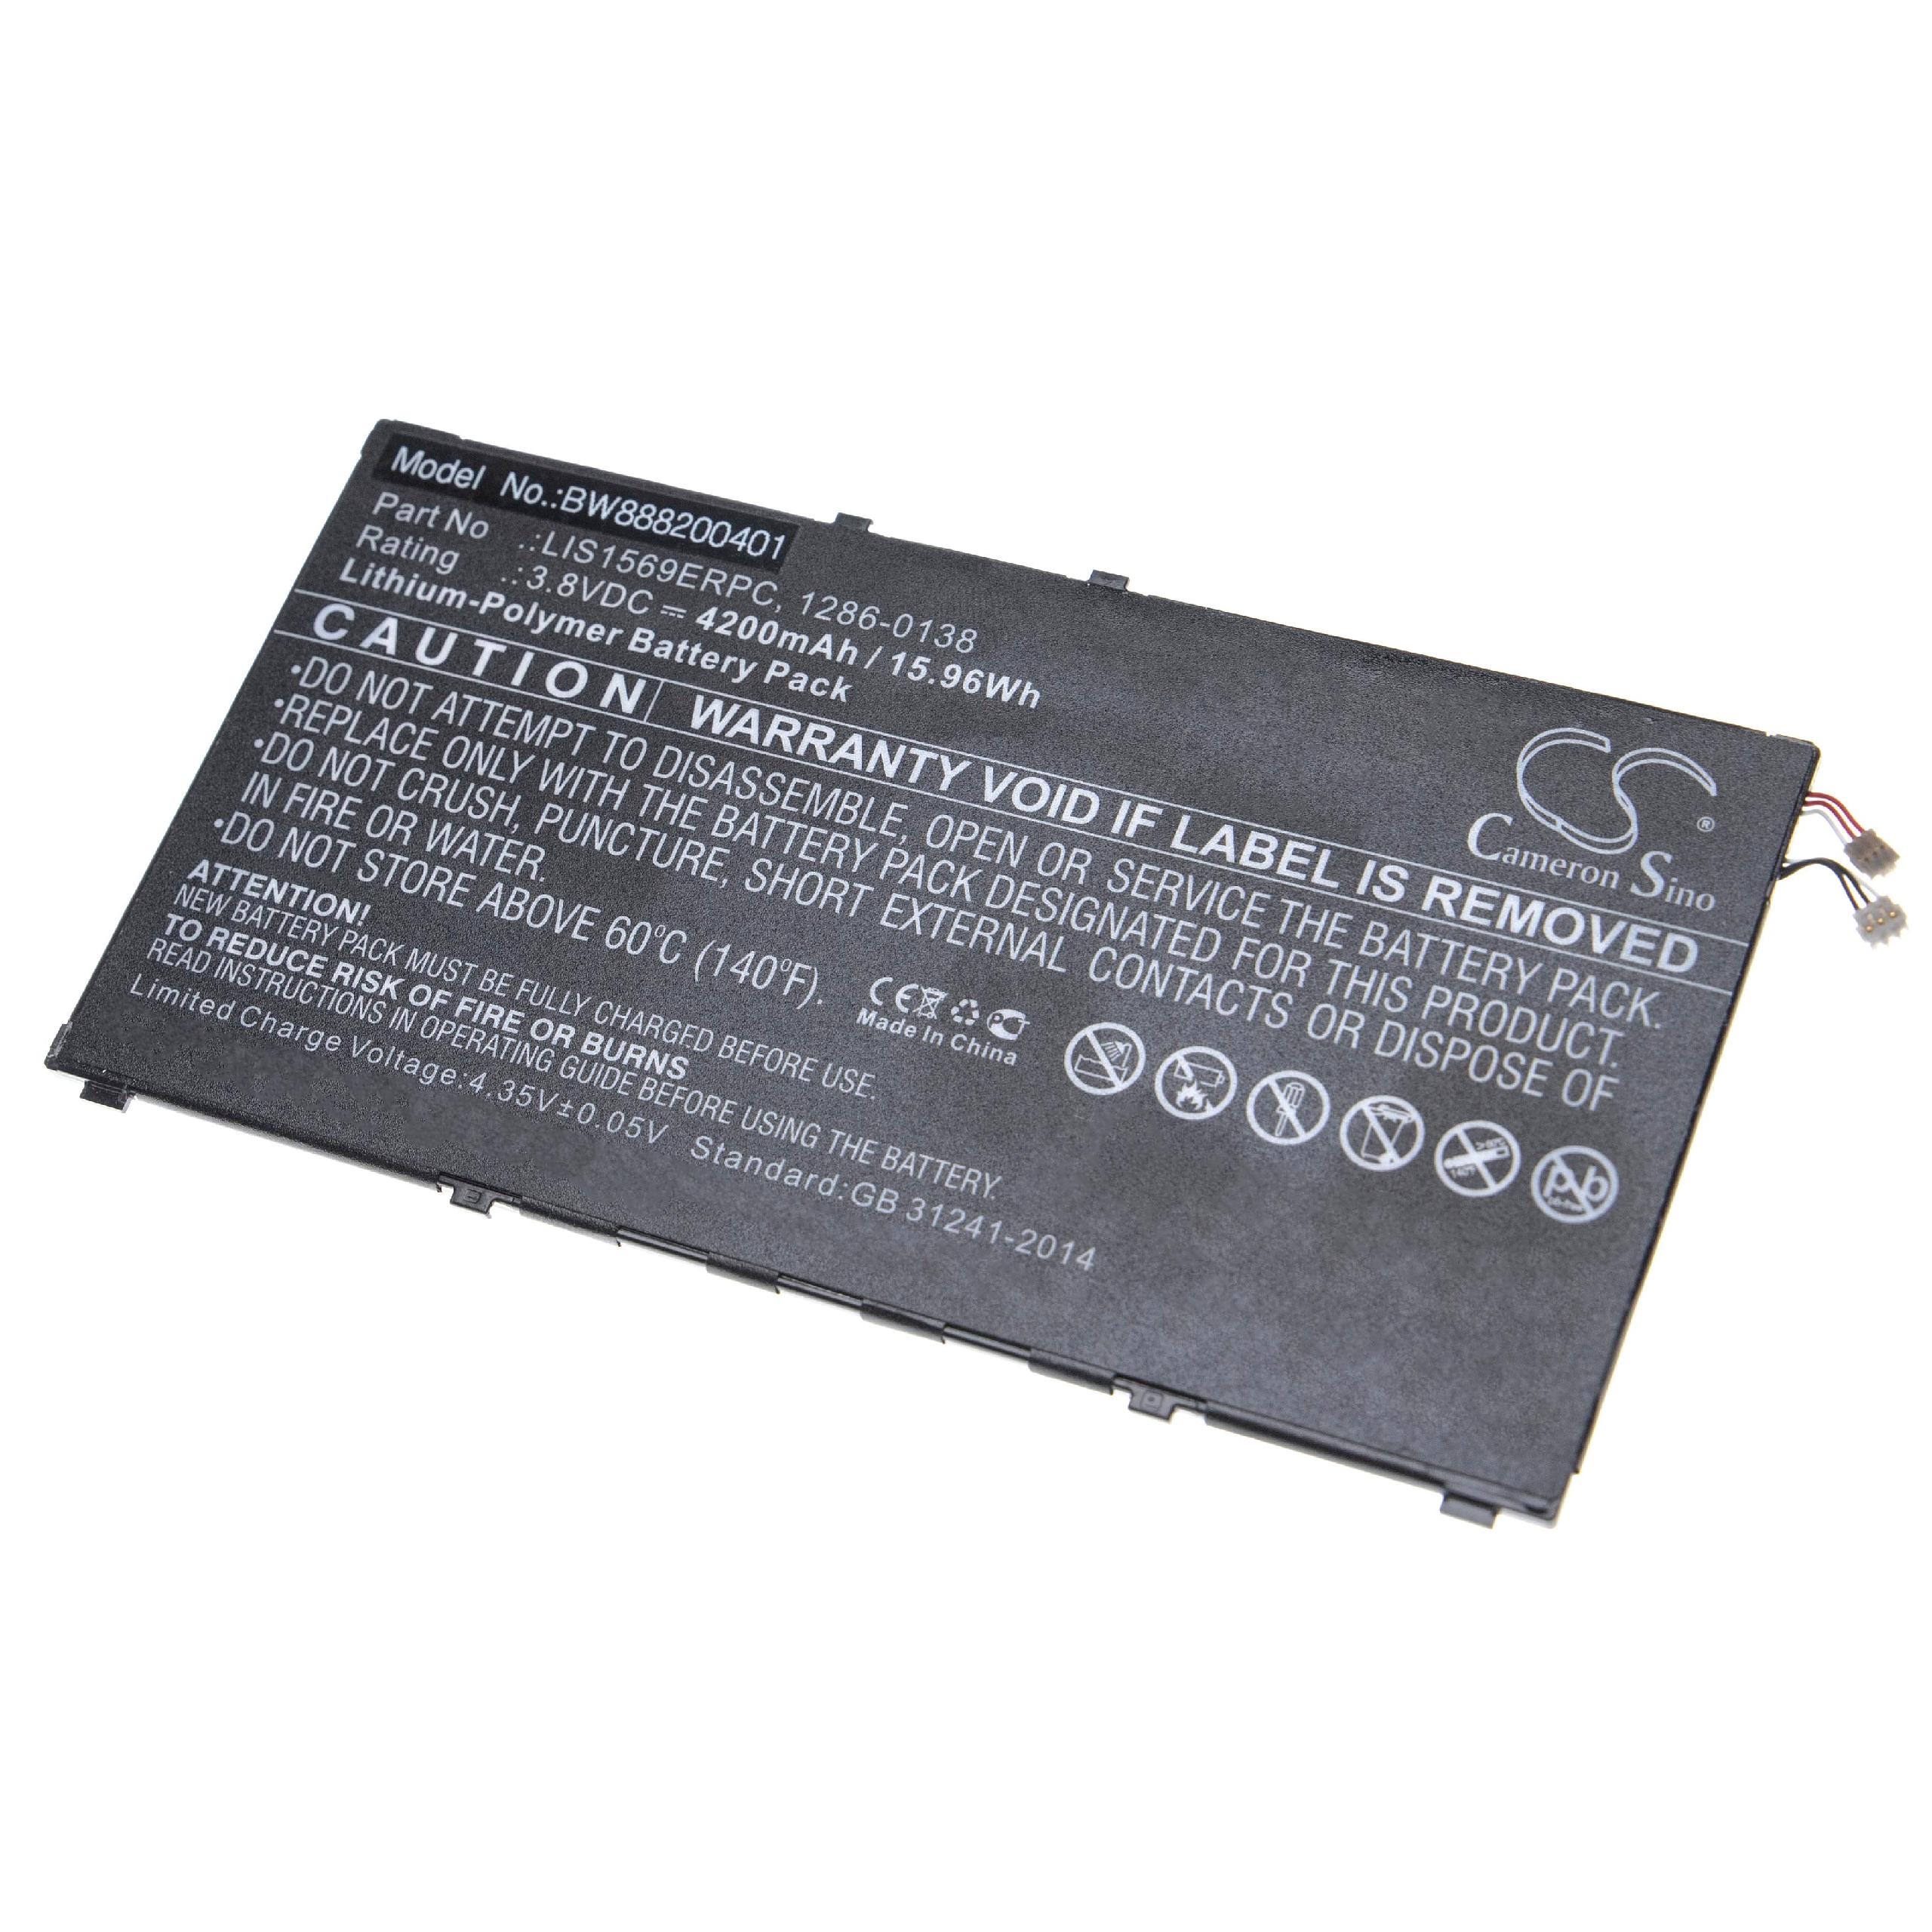 Akumulator bateria do telefonu smartfona zam. Sony LIS1569ERPC, 1286-0138 - 4200mAh, 3,8V, LiPo